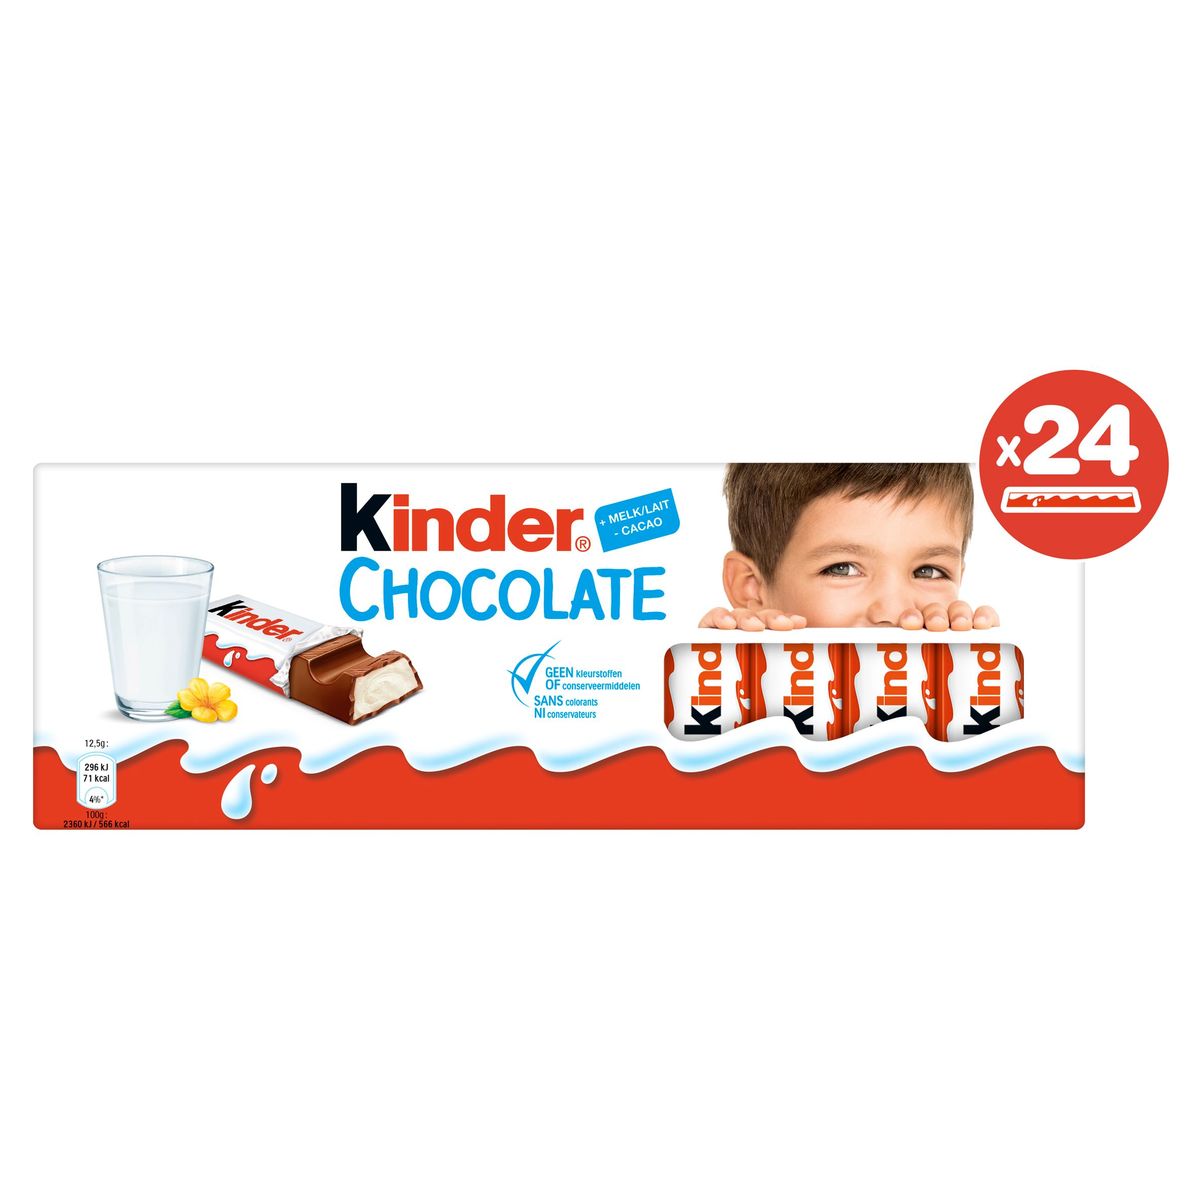 Kinder Chocolate 24 Bâtonnets 300 g